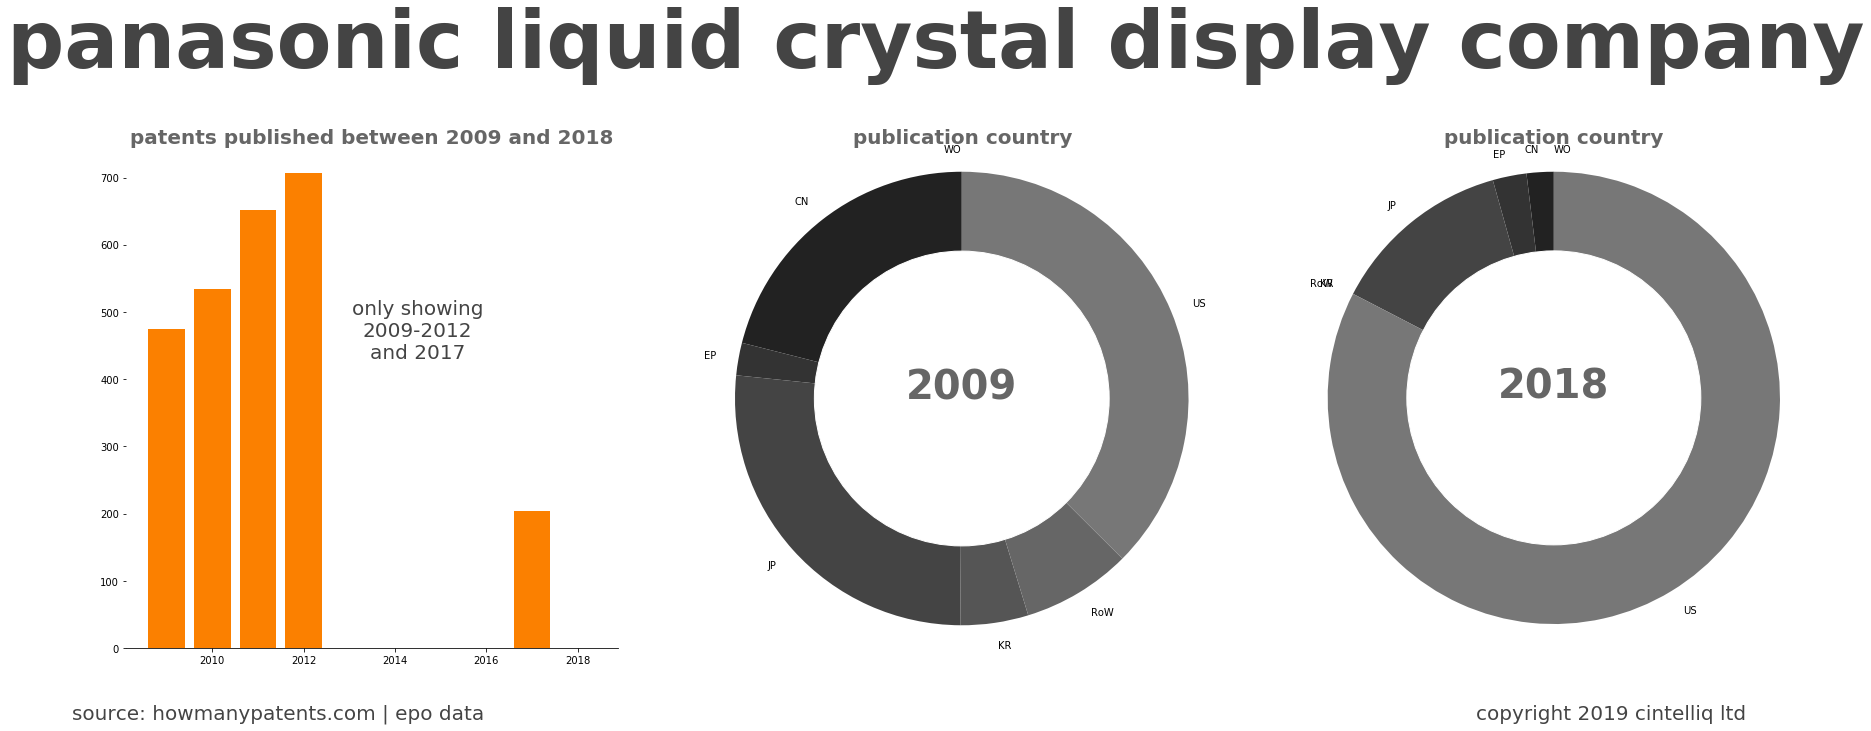 summary of patents for Panasonic Liquid Crystal Display Company